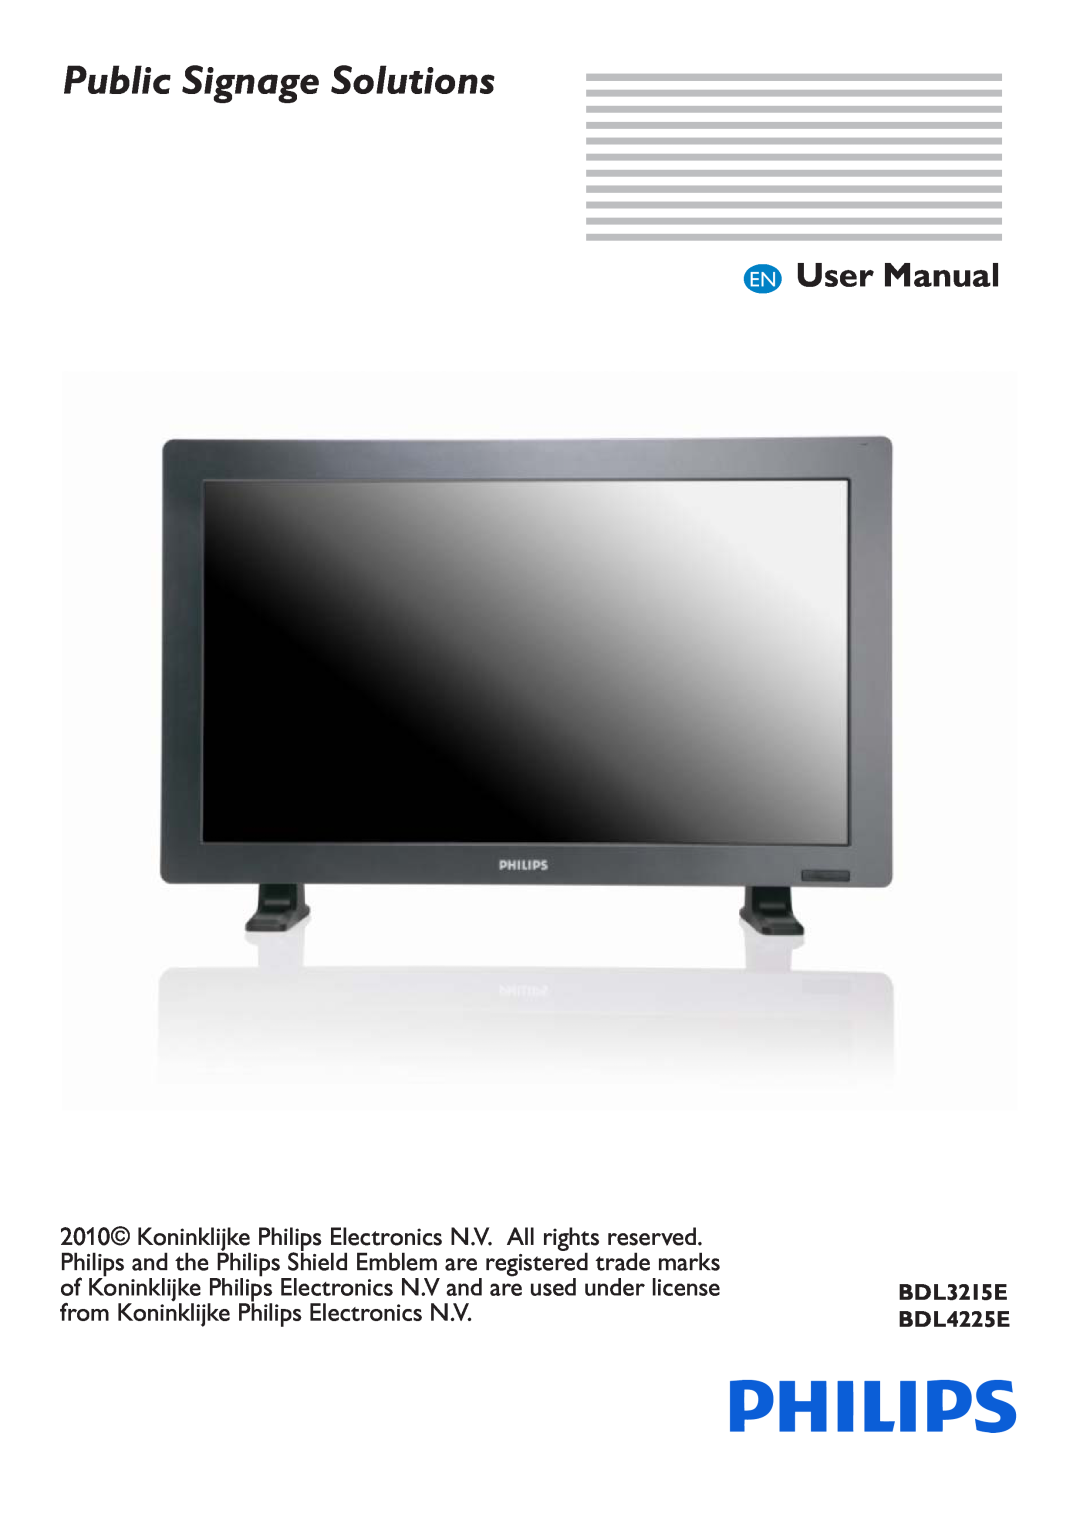 Philips user manual Public Signage Solutions, EN User Manual, BDL3215E BDL4225E 